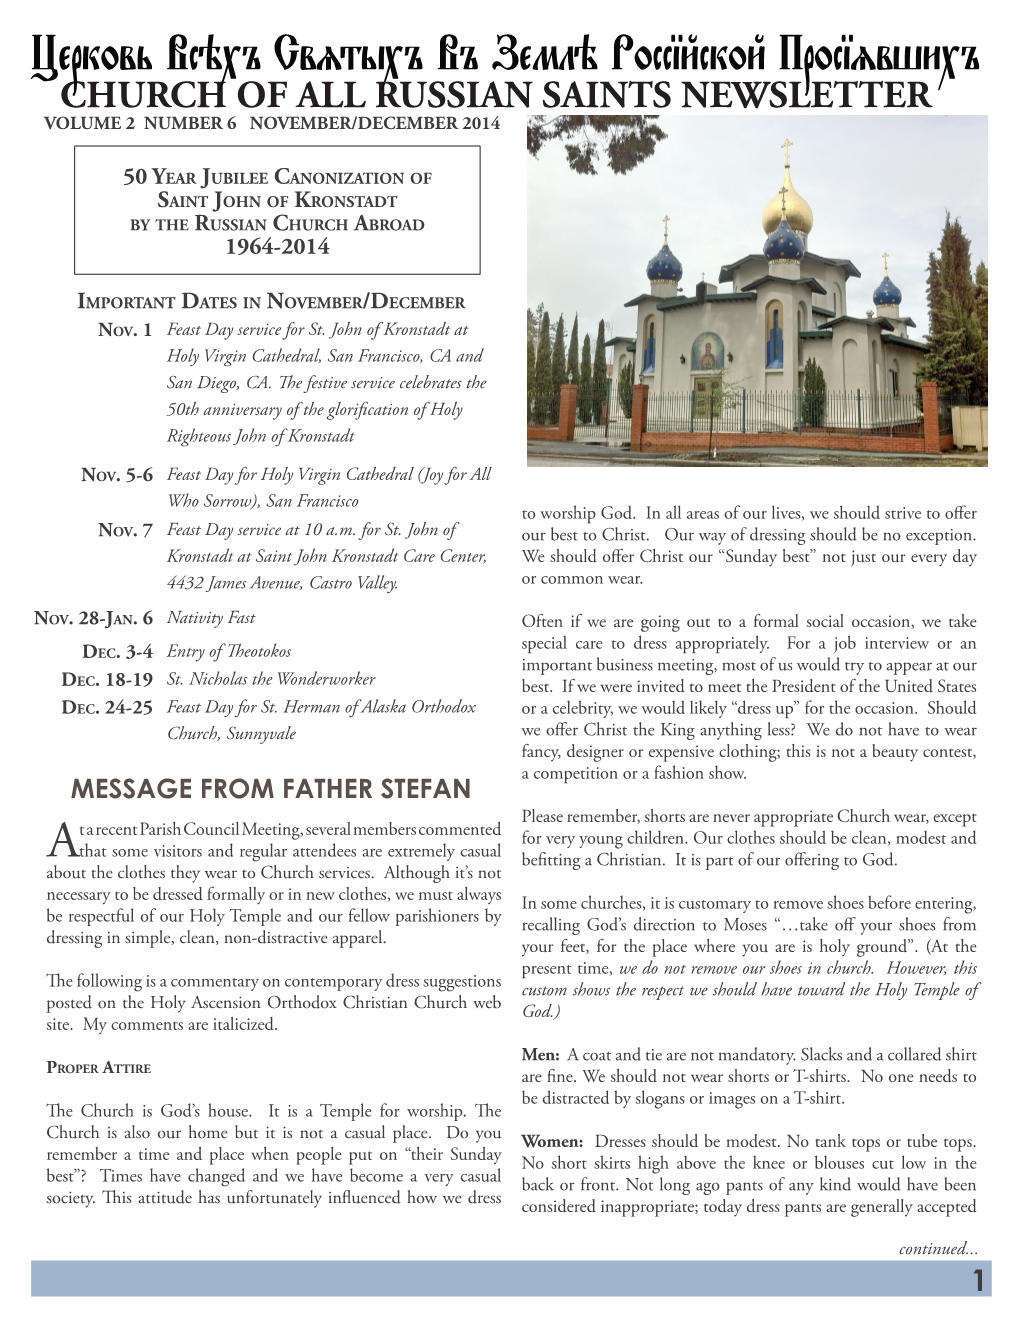 Church of All Russian Saints Newsletter Volume 2 Number 6 November/December 2014